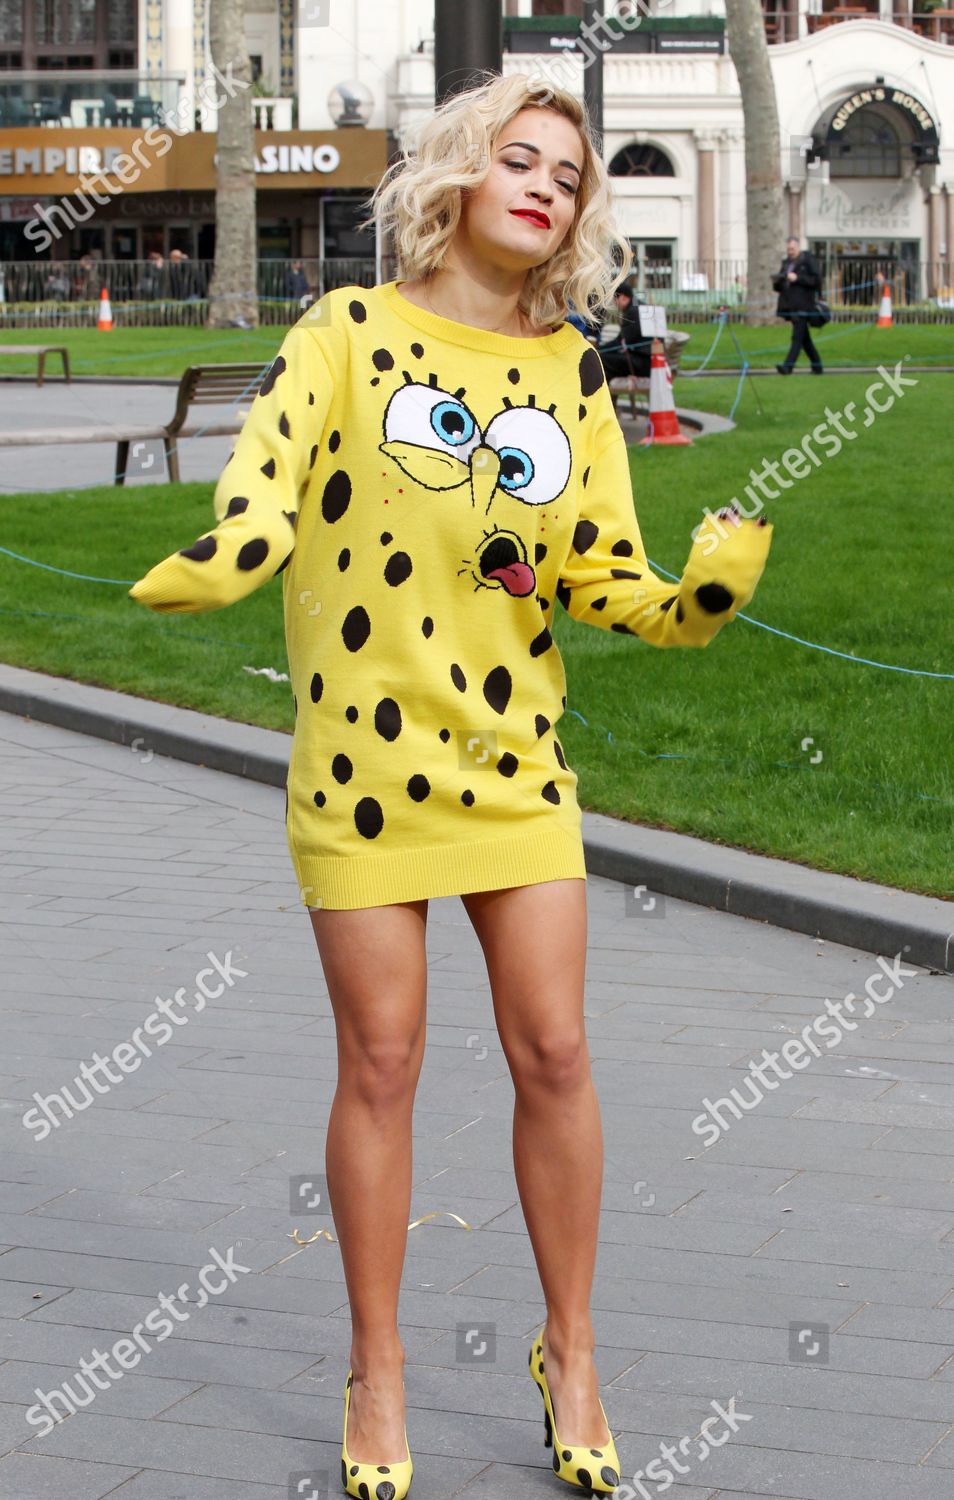 Rita Ora Dancing Editorial Stock Photo - Stock Image | Shutterstock